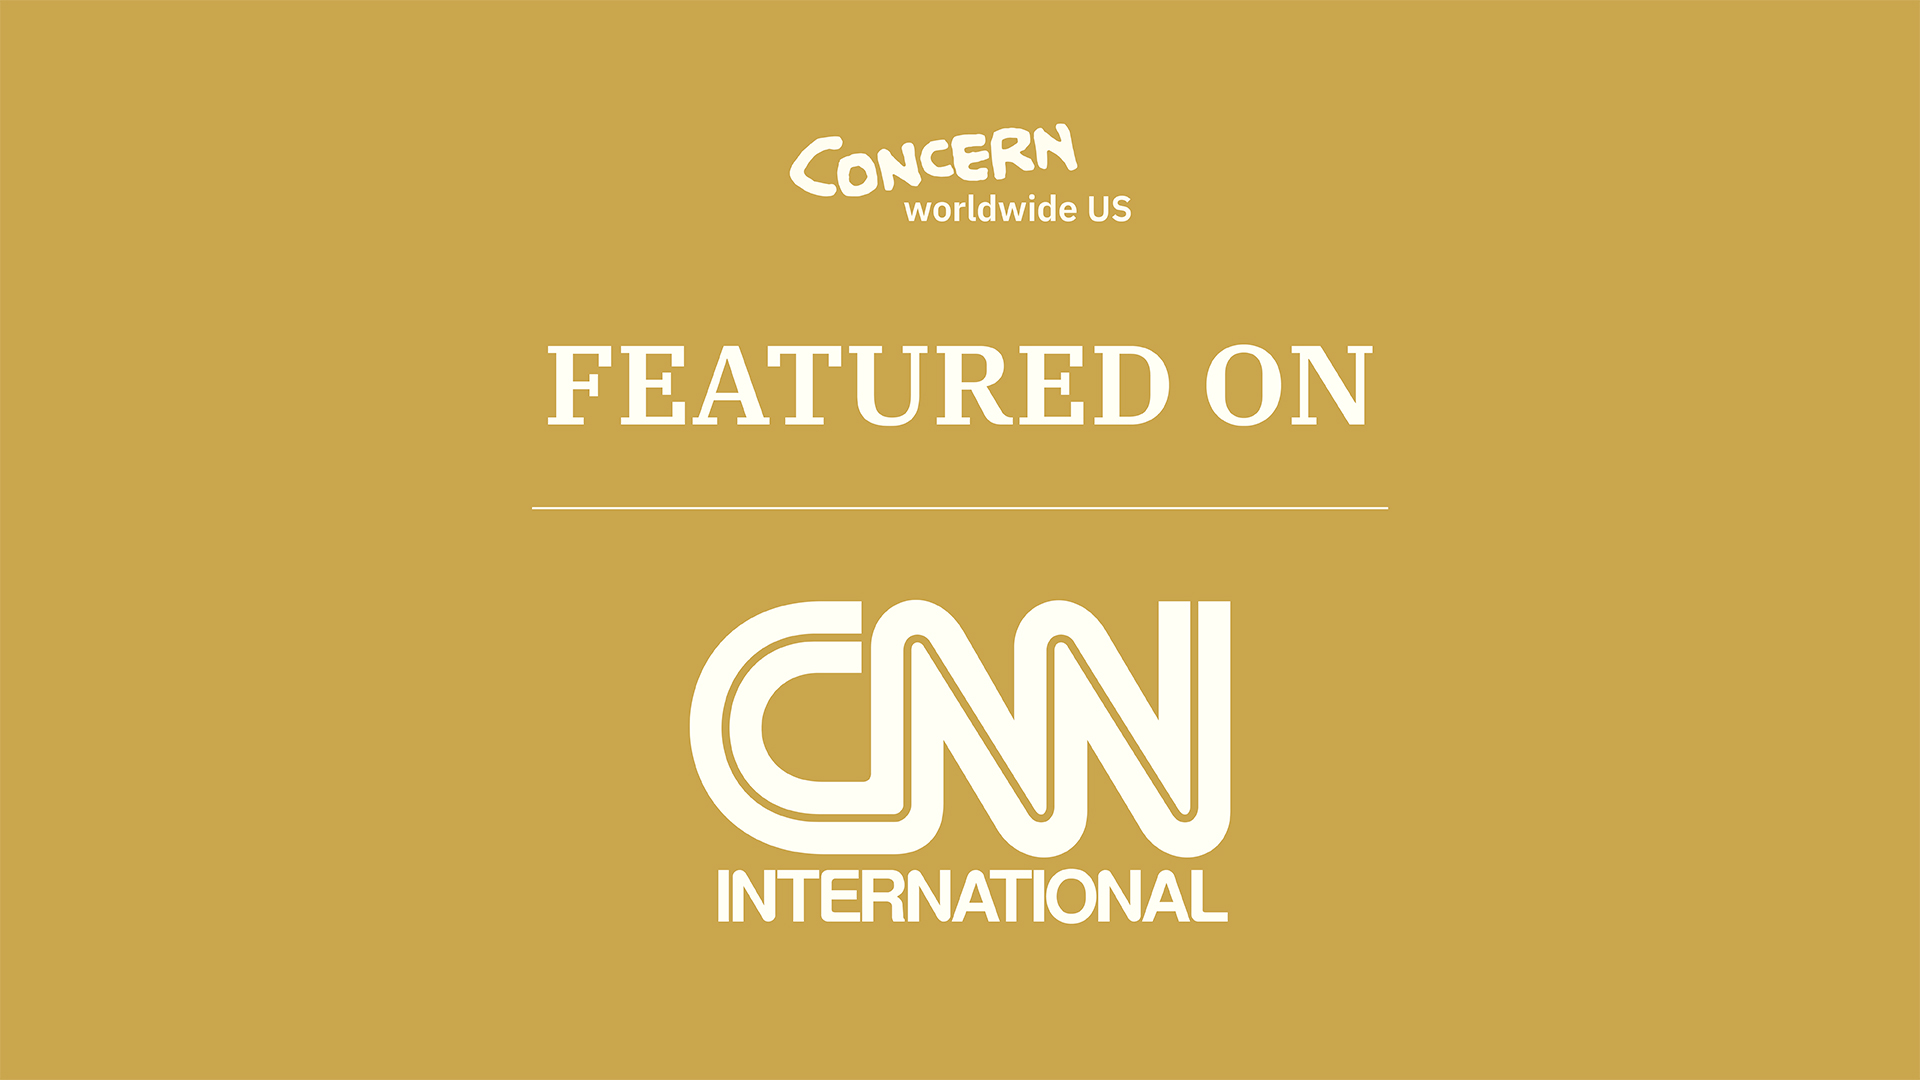 Concern Worldwide featured on CNN International with logos